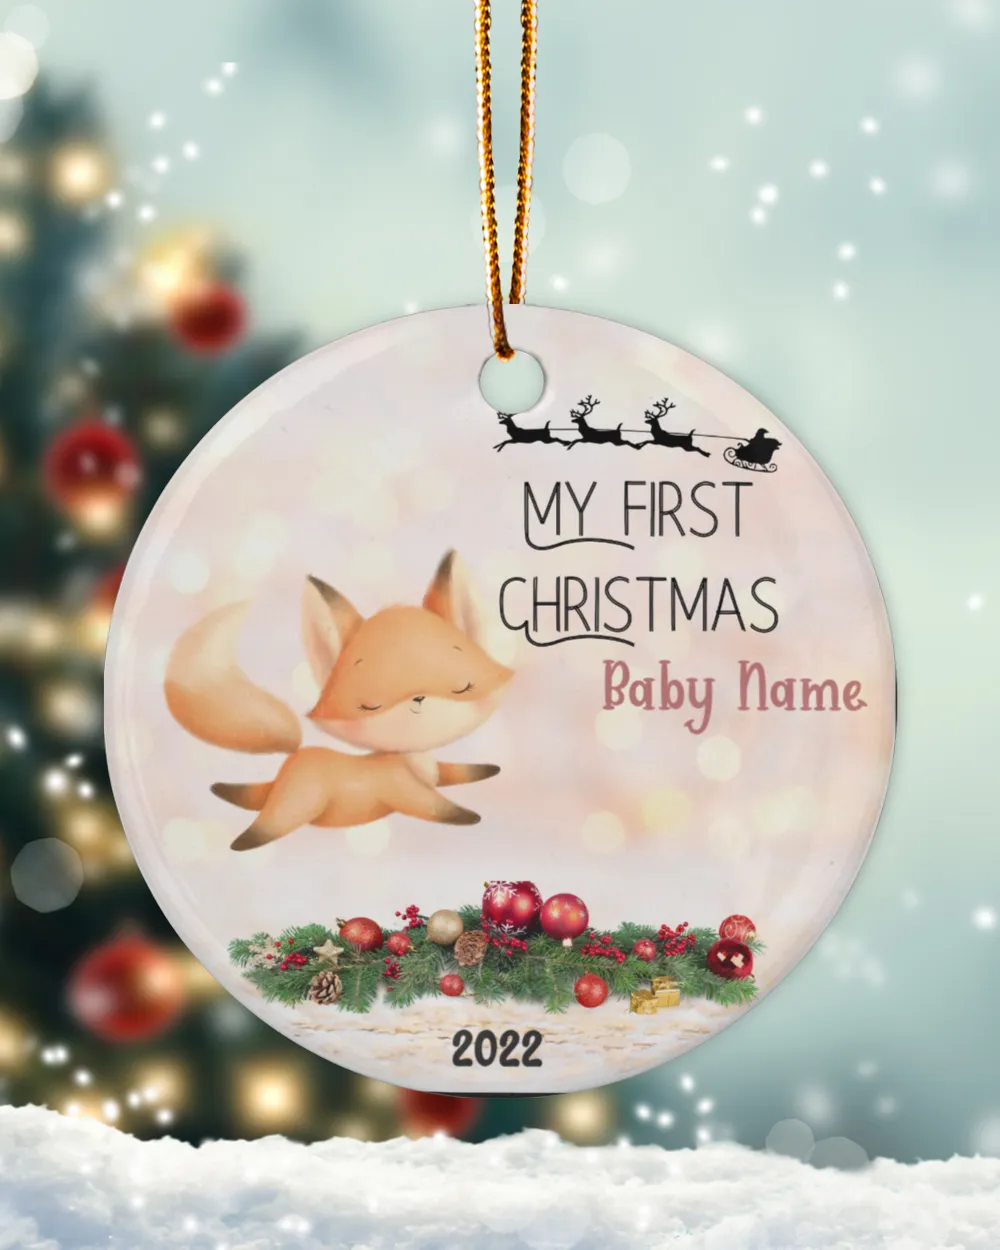 Persanalized Newborn Christmas Ornament 2022 - Custom Name Baby Ornament  - Tree Ornament Newborn Announcement, Personalized Baby Ornament, Keepsake Ornament for Newborn Baby